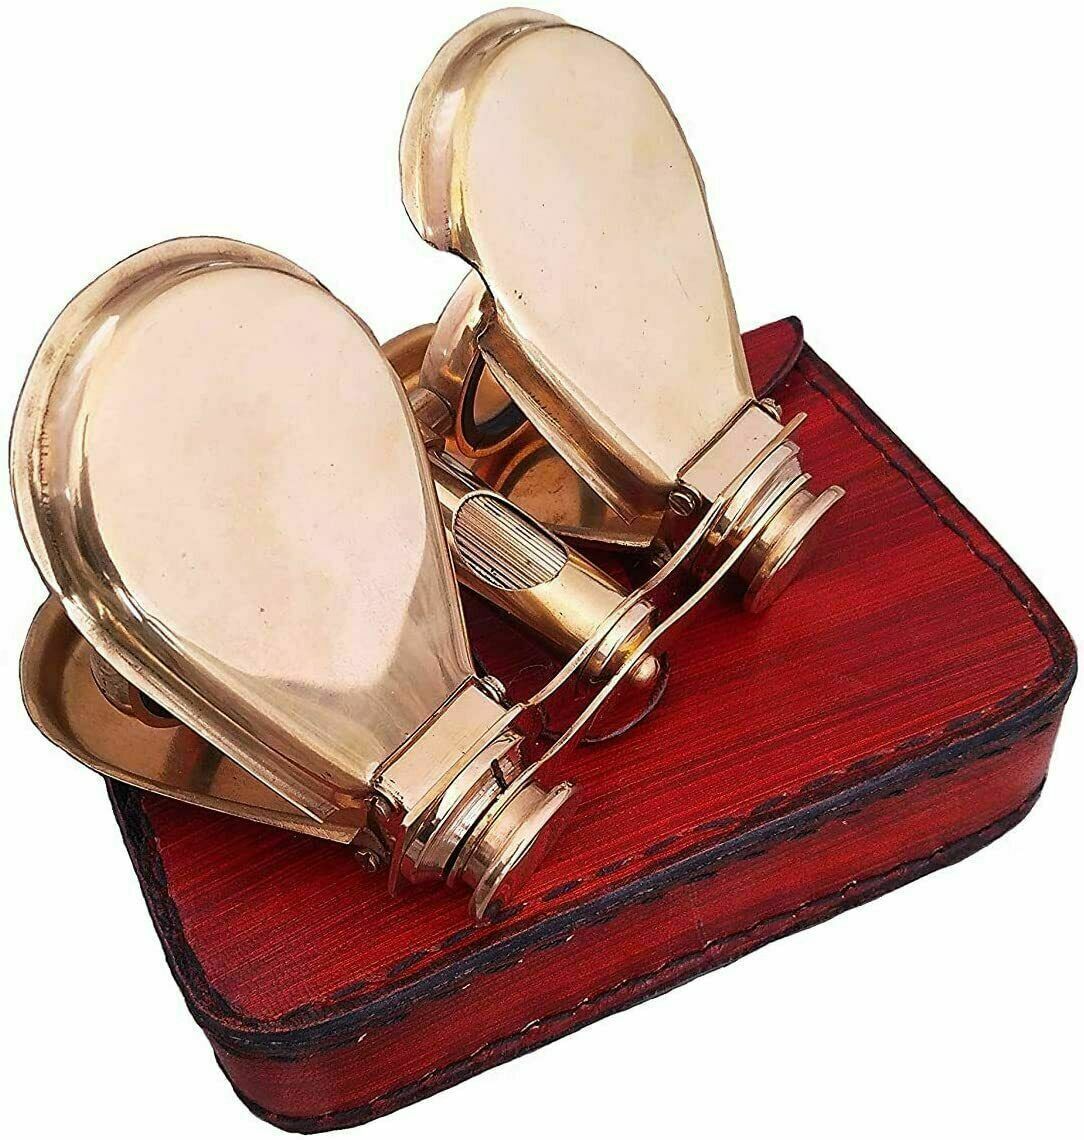 Vintage Brass Folding Binoculars/Opera Glasses/Spyglass with Leather Case Gifts